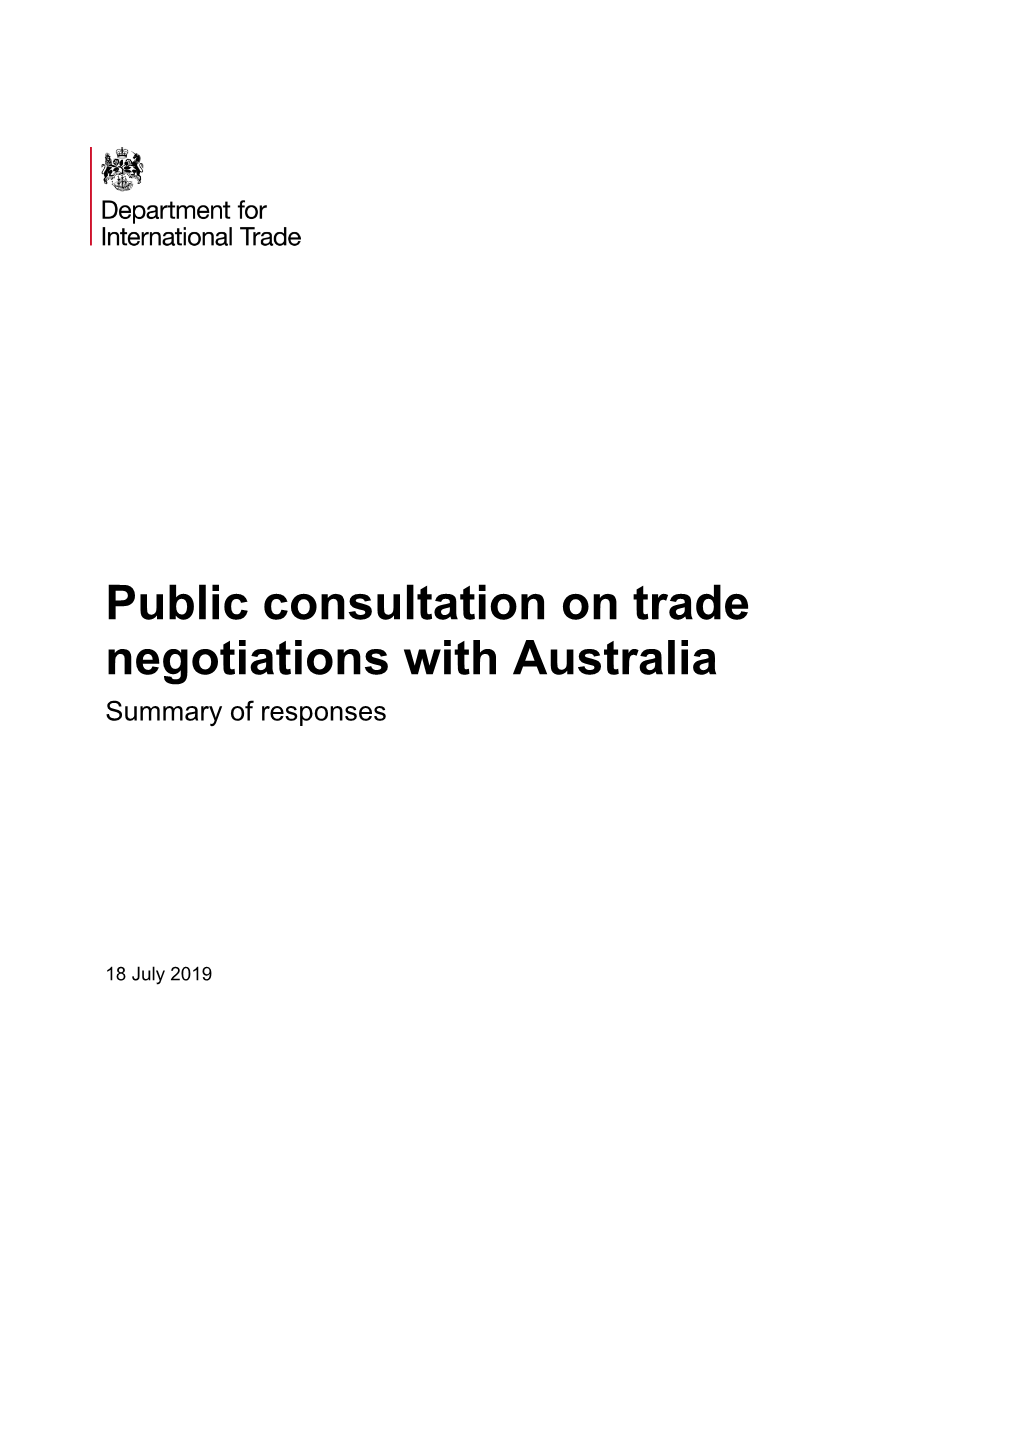 Public Consultation on Trade Negotiations with Australia Summary of Responses